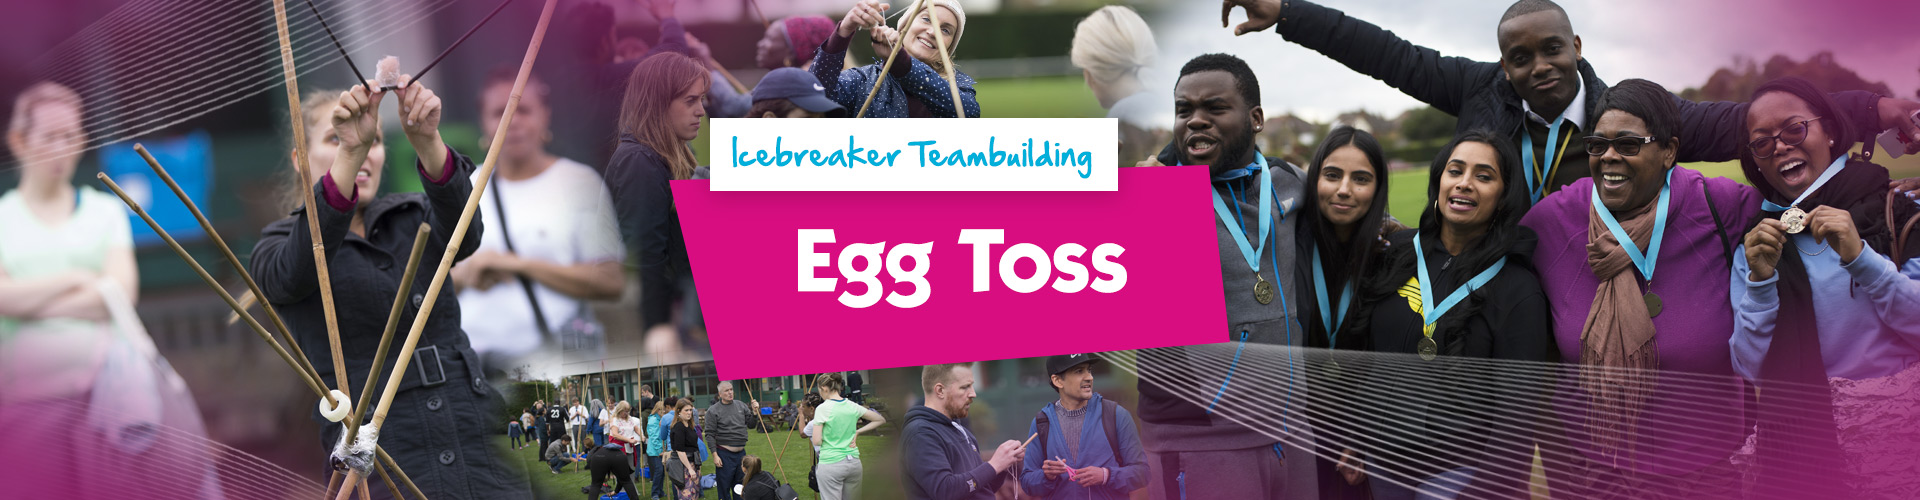 Teambuilding | Egg Toss